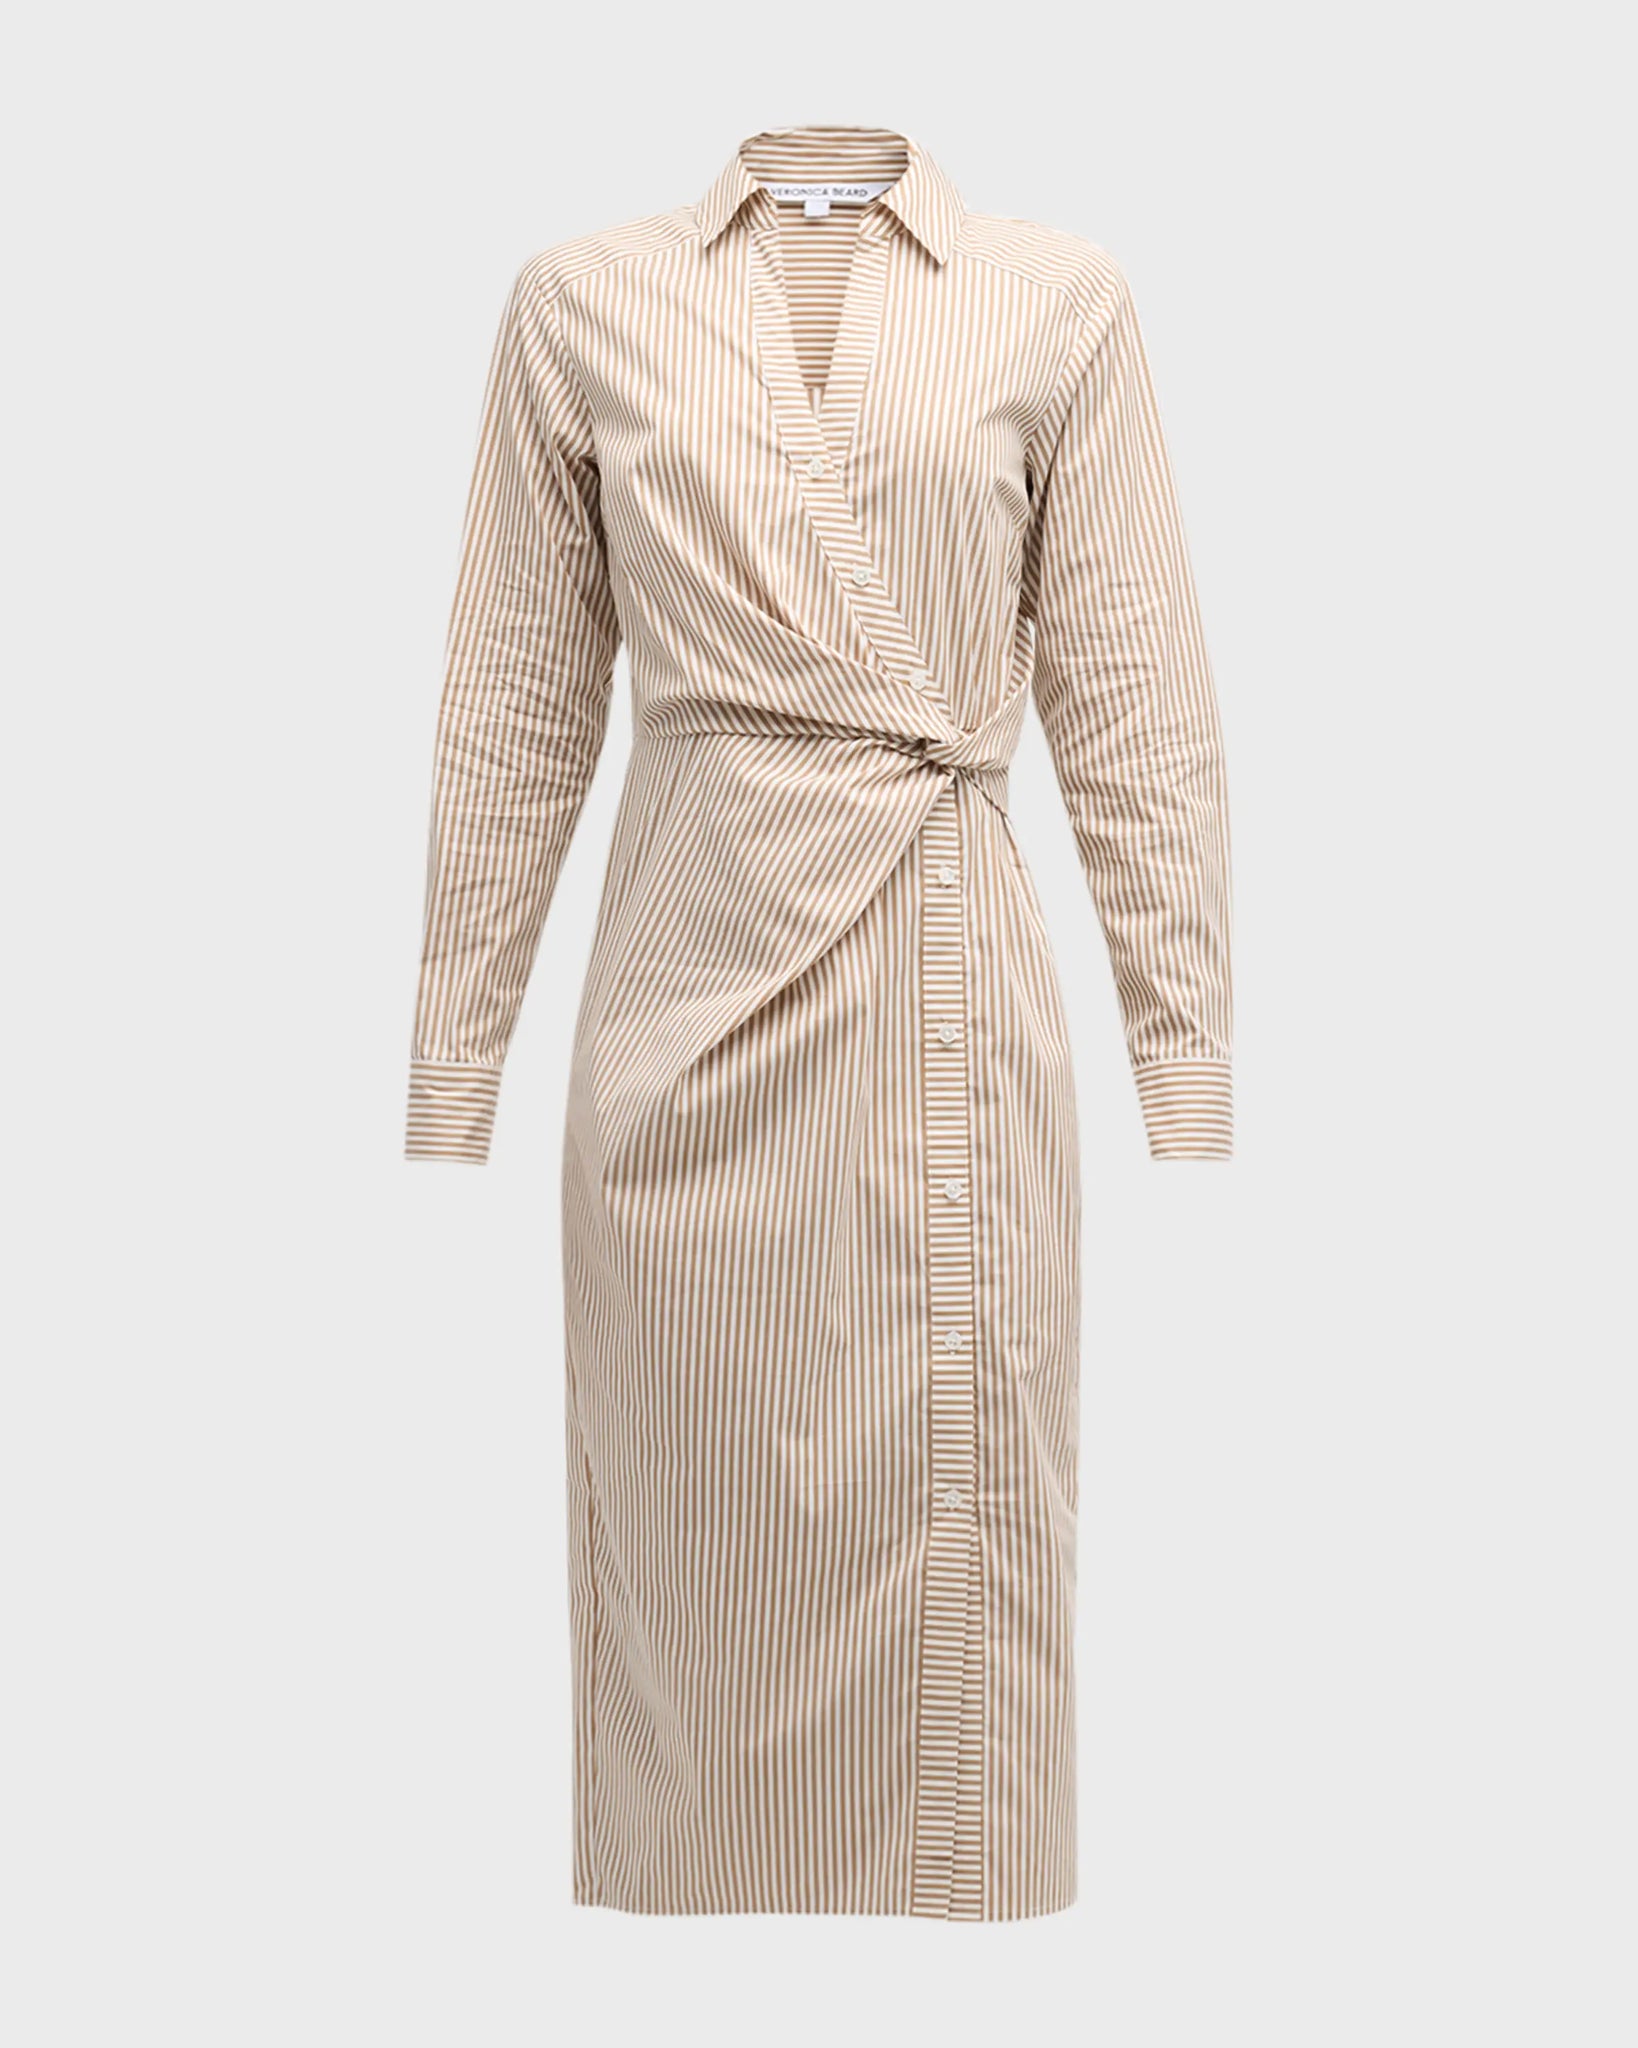 Wright Dress in Acorn/White